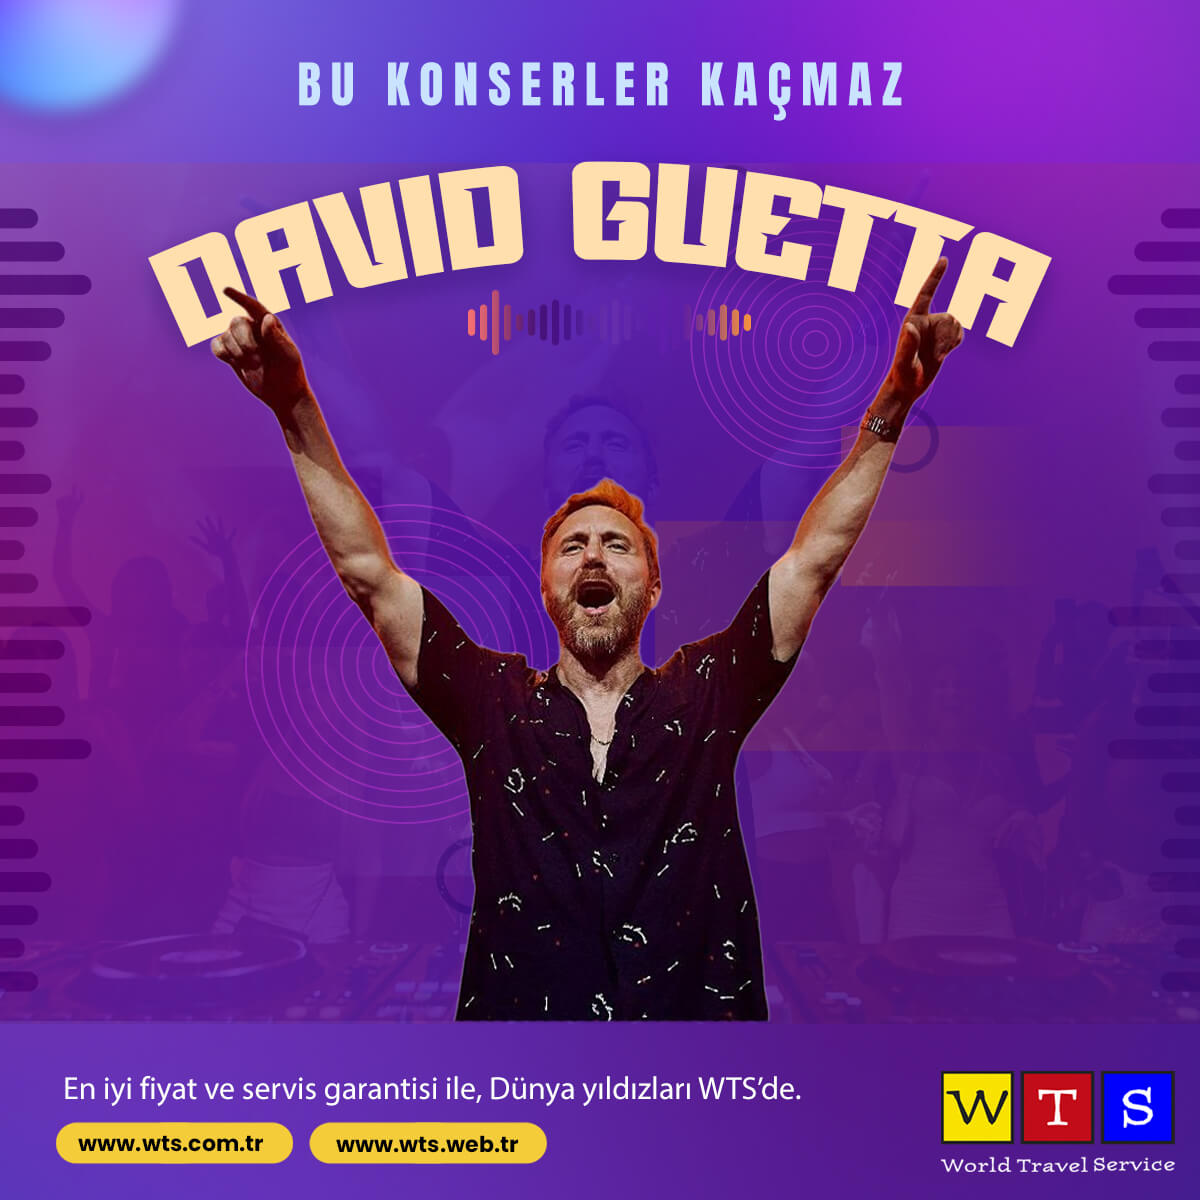 David Guetta Konserleri